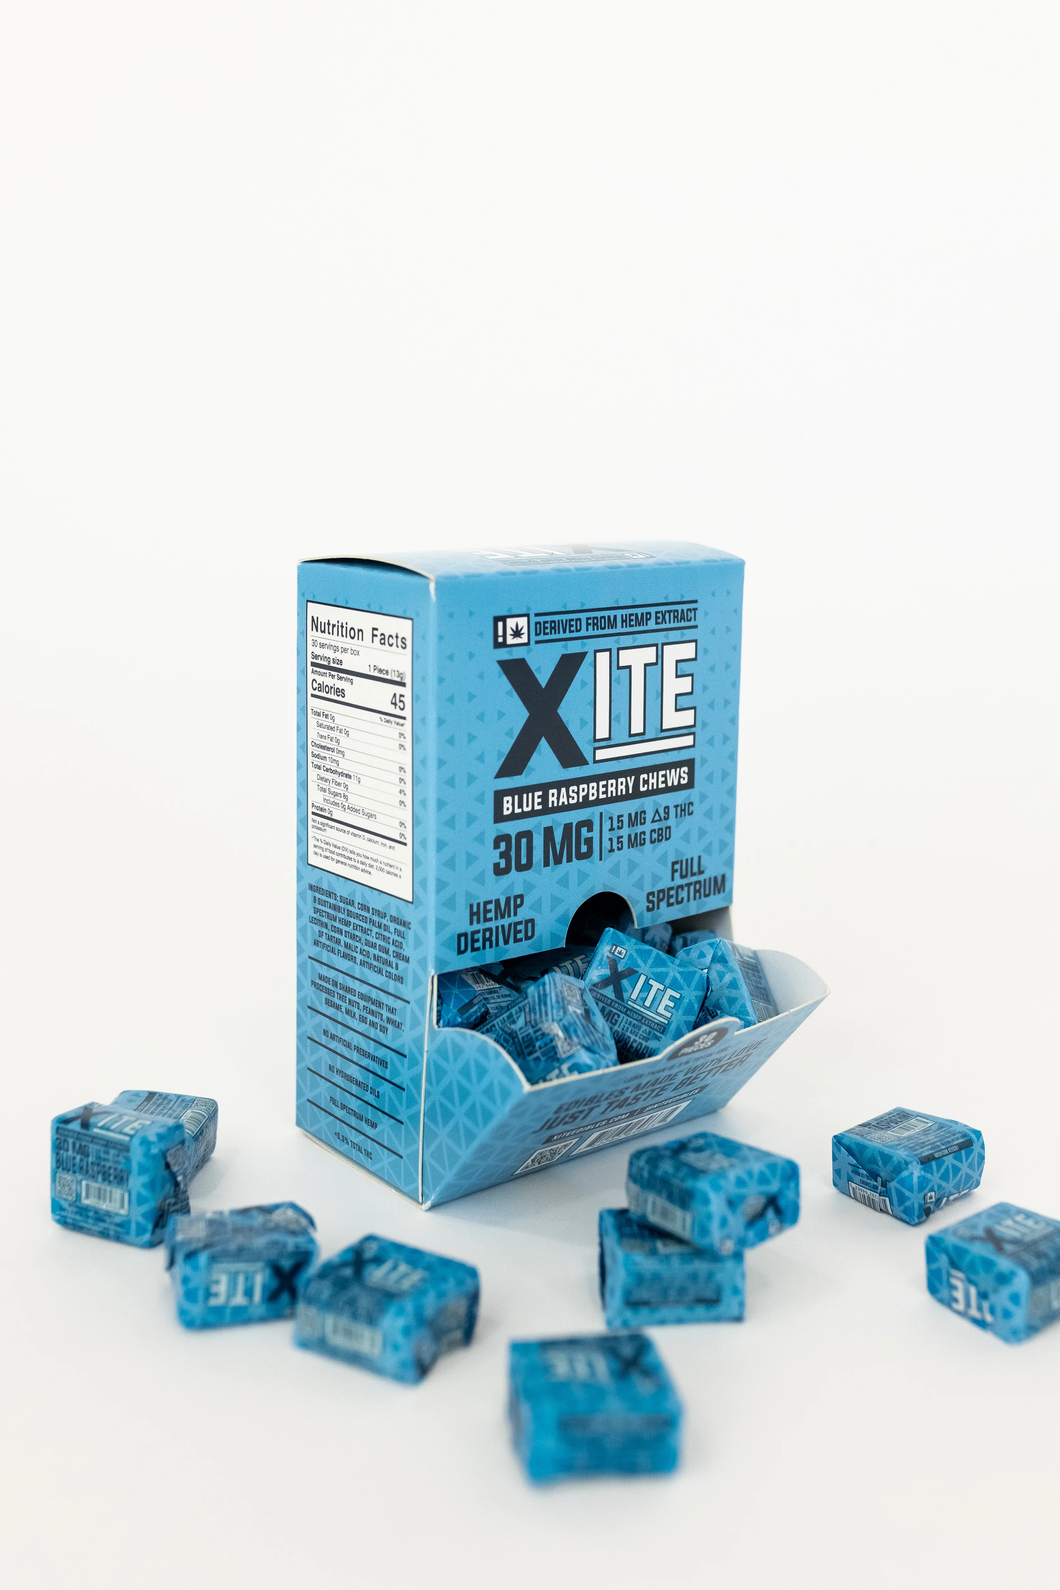 Patsy's Xite Delta 9 THC Ratio Blue Raspberry Chews